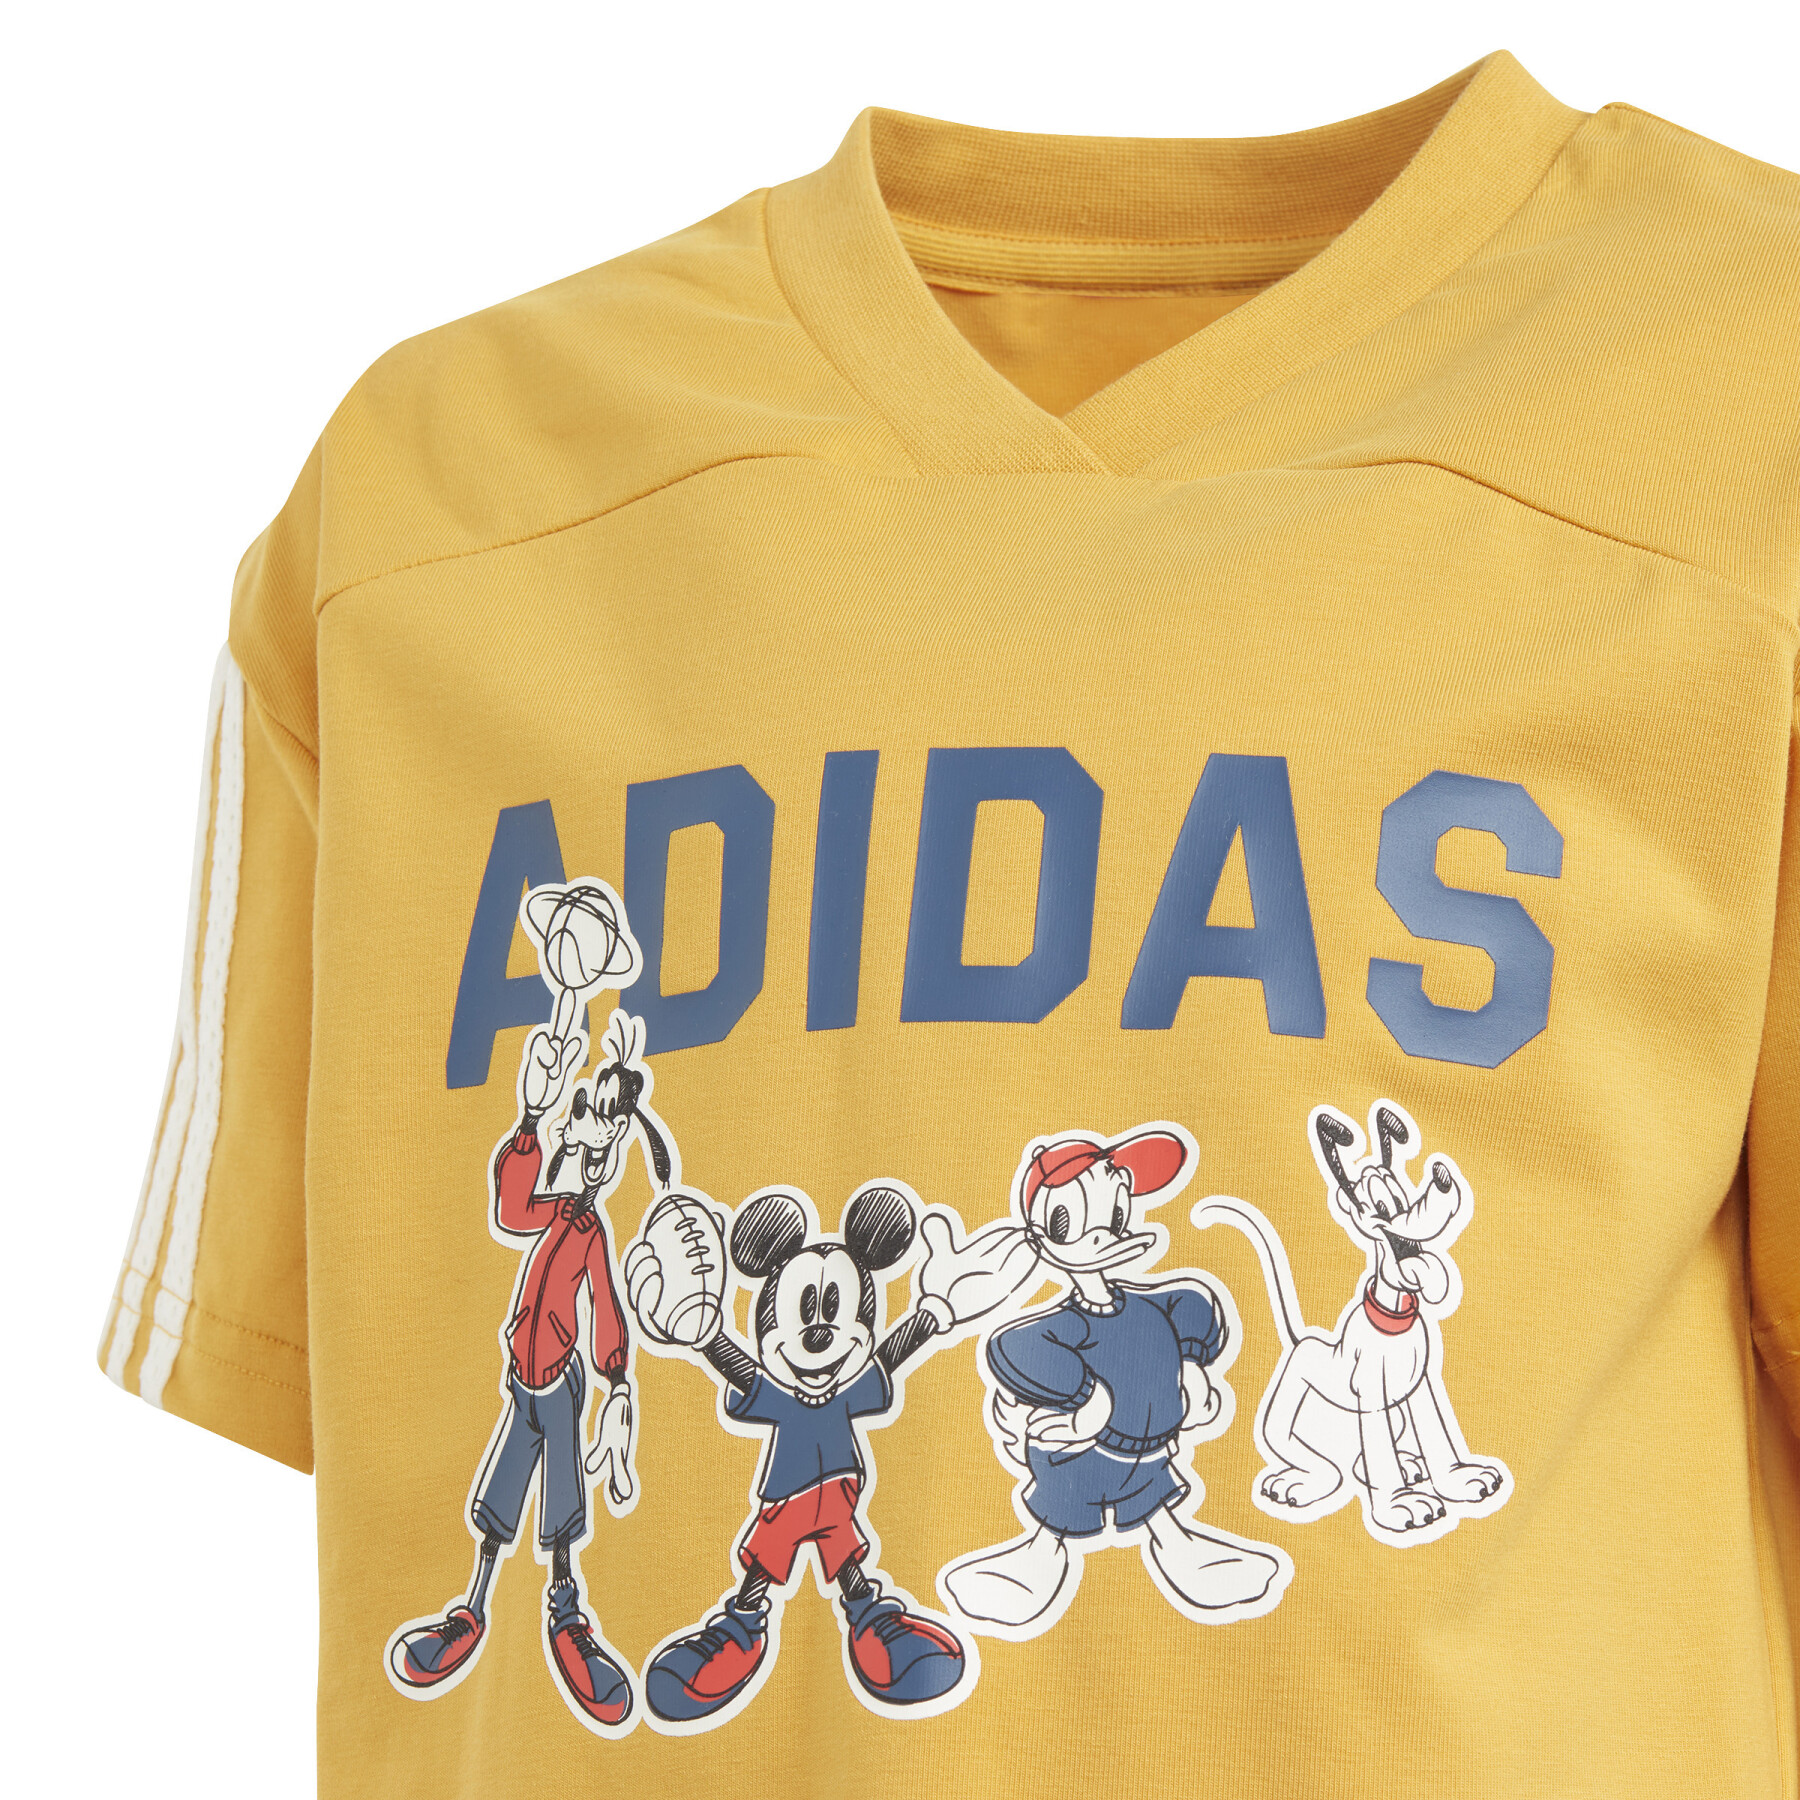 Kinder t-shirt en korte broek set adidas Disney Mickey Mouse